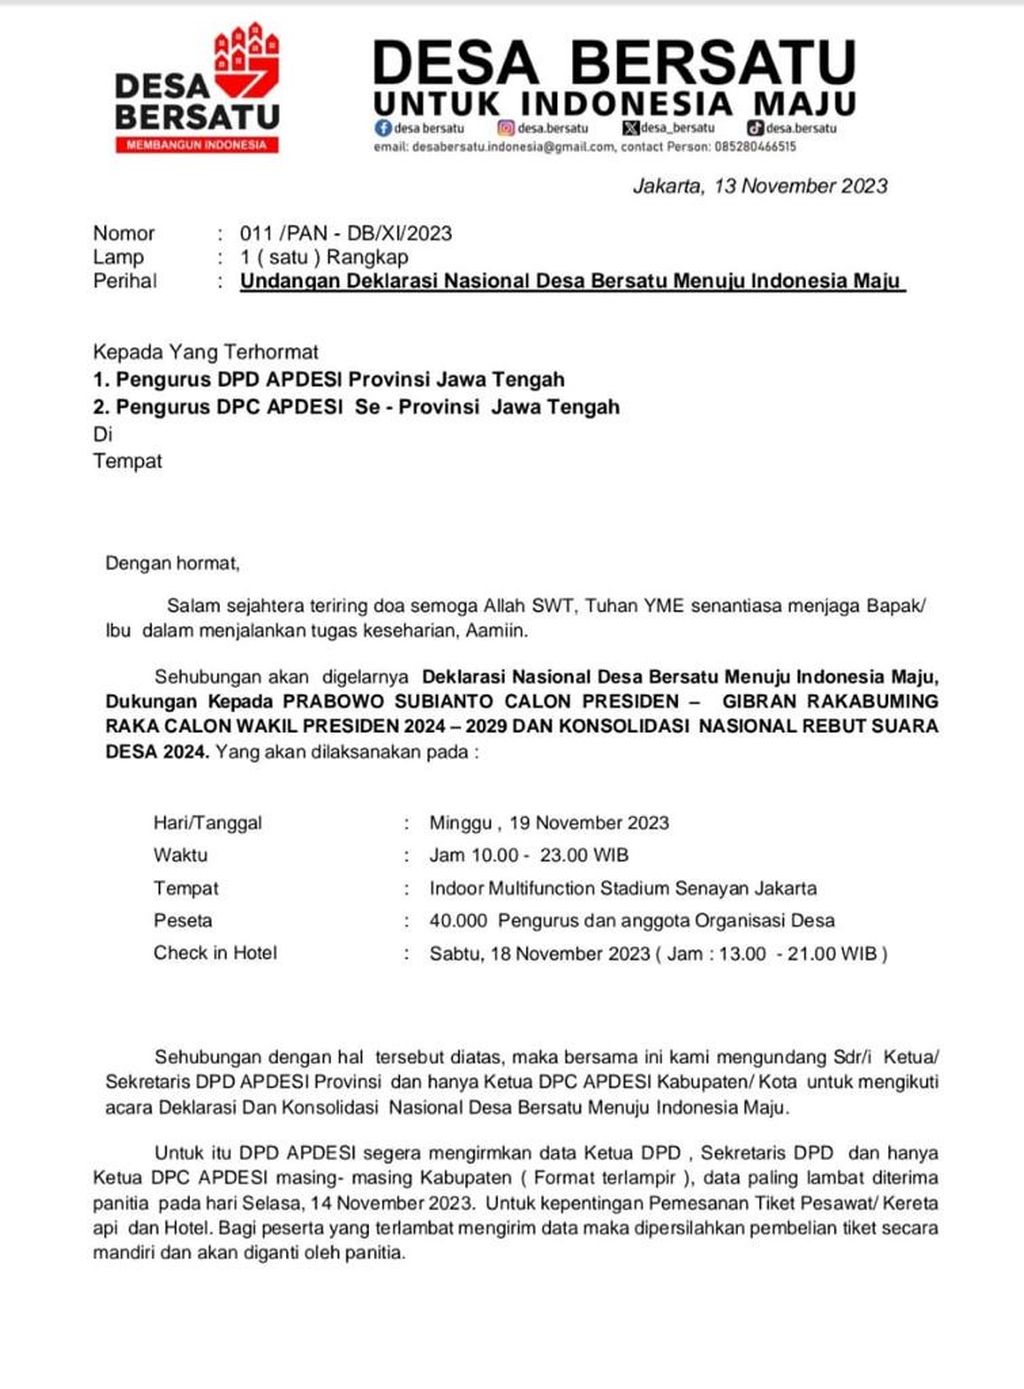 Foto undangan Asosiasi Pemerintah Desa Seluruh Indonesia (Apdesi) kepada sejumlah pengurus DPD Apdesi terkait acara deklarasi pasangan capres-cawapres Prabowo Subianto-Gibran Rakabuming Raka, di Kompleks Gelora Bung Karno, Jakarta, Minggu (19/11/2023). 